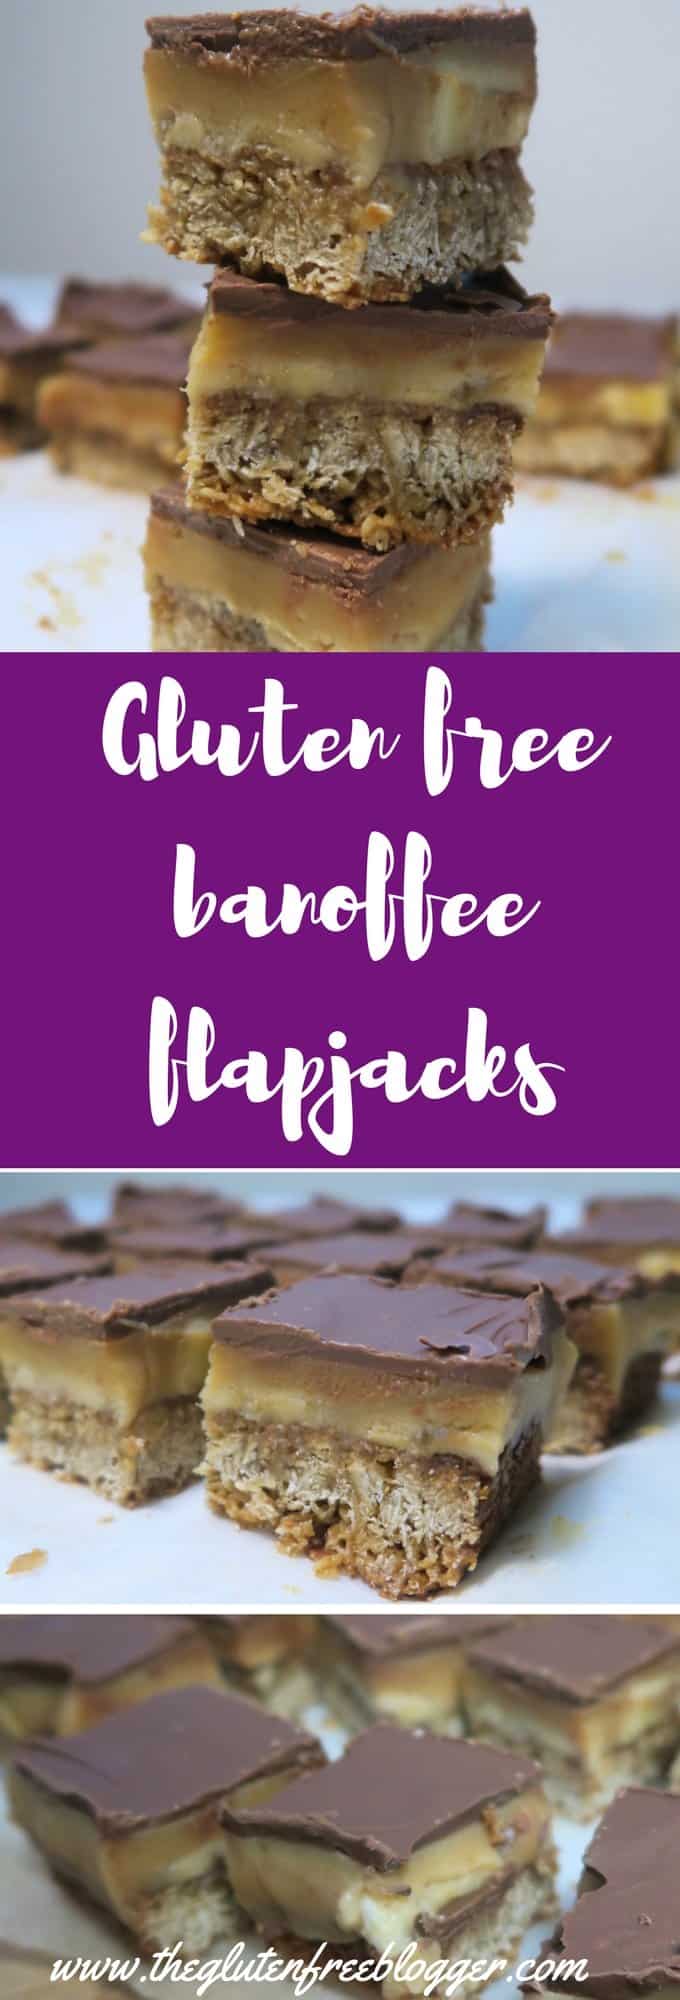 Gluten free banoffee flapjack recipe - www.theglutenfreeblogger.com